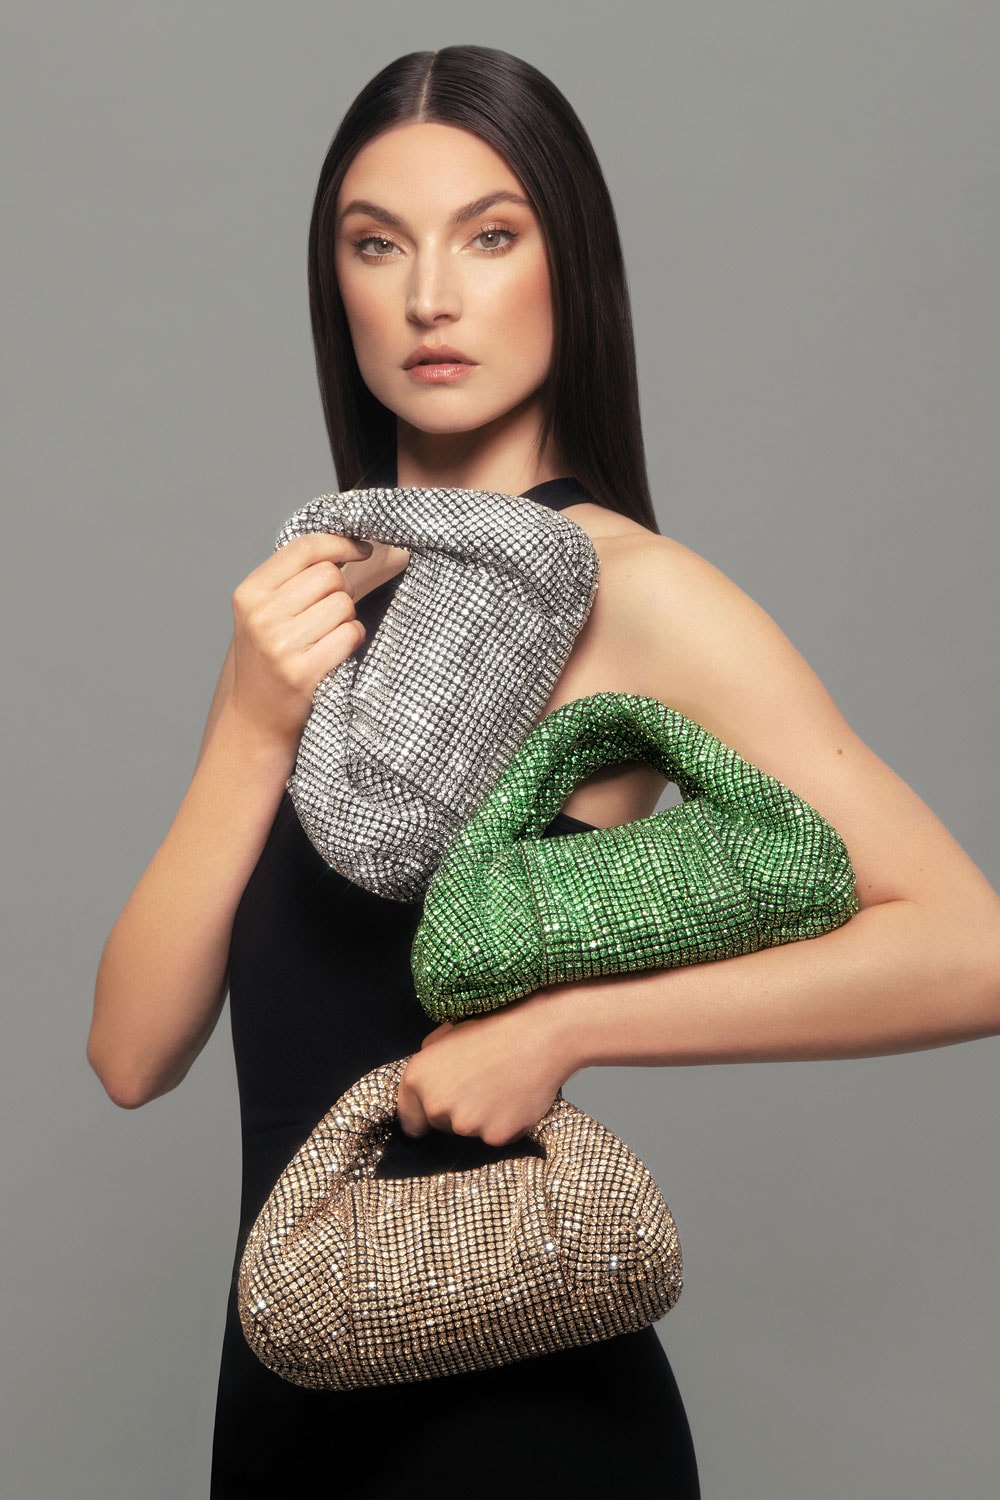 stuart weitzman limited edition handbag collection exclusive moda loveletter vip mini tote clutch envelope plume frame